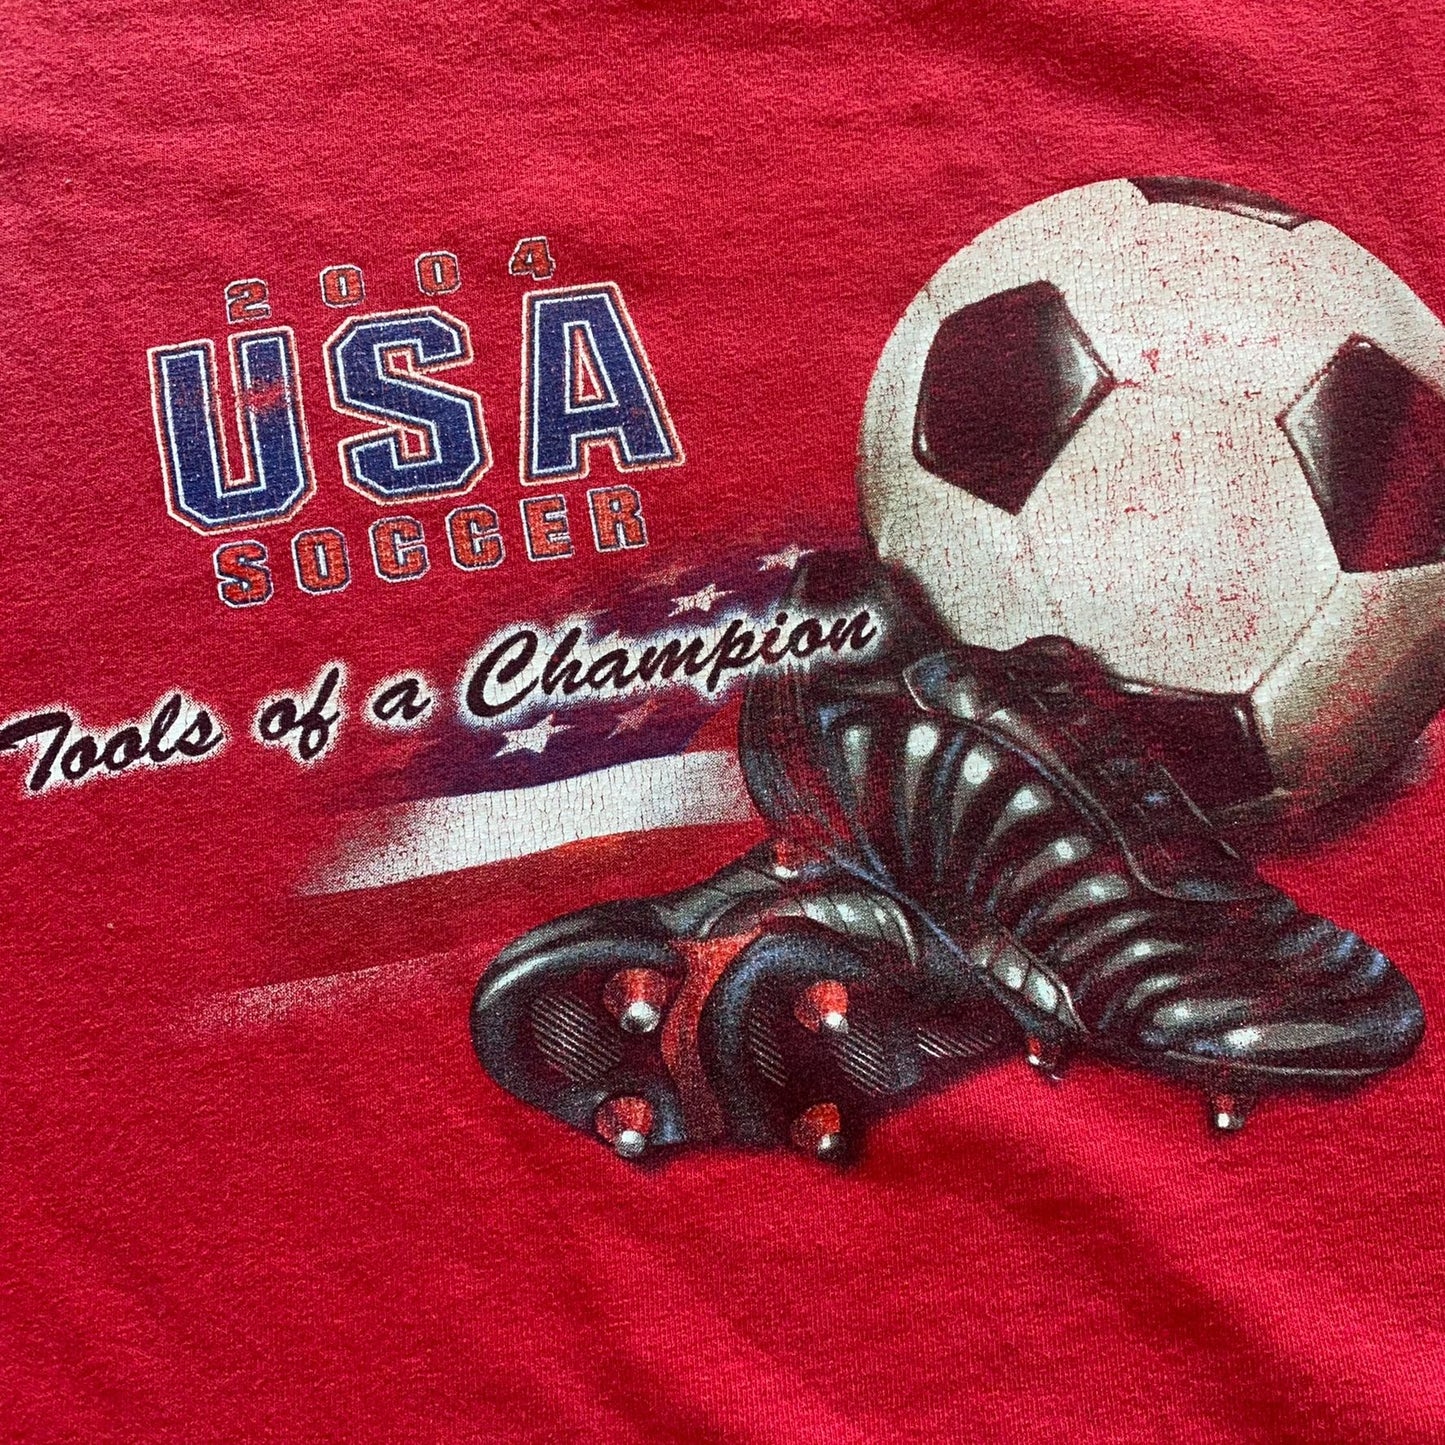 Team USA Soccer Vintage T-Shirt